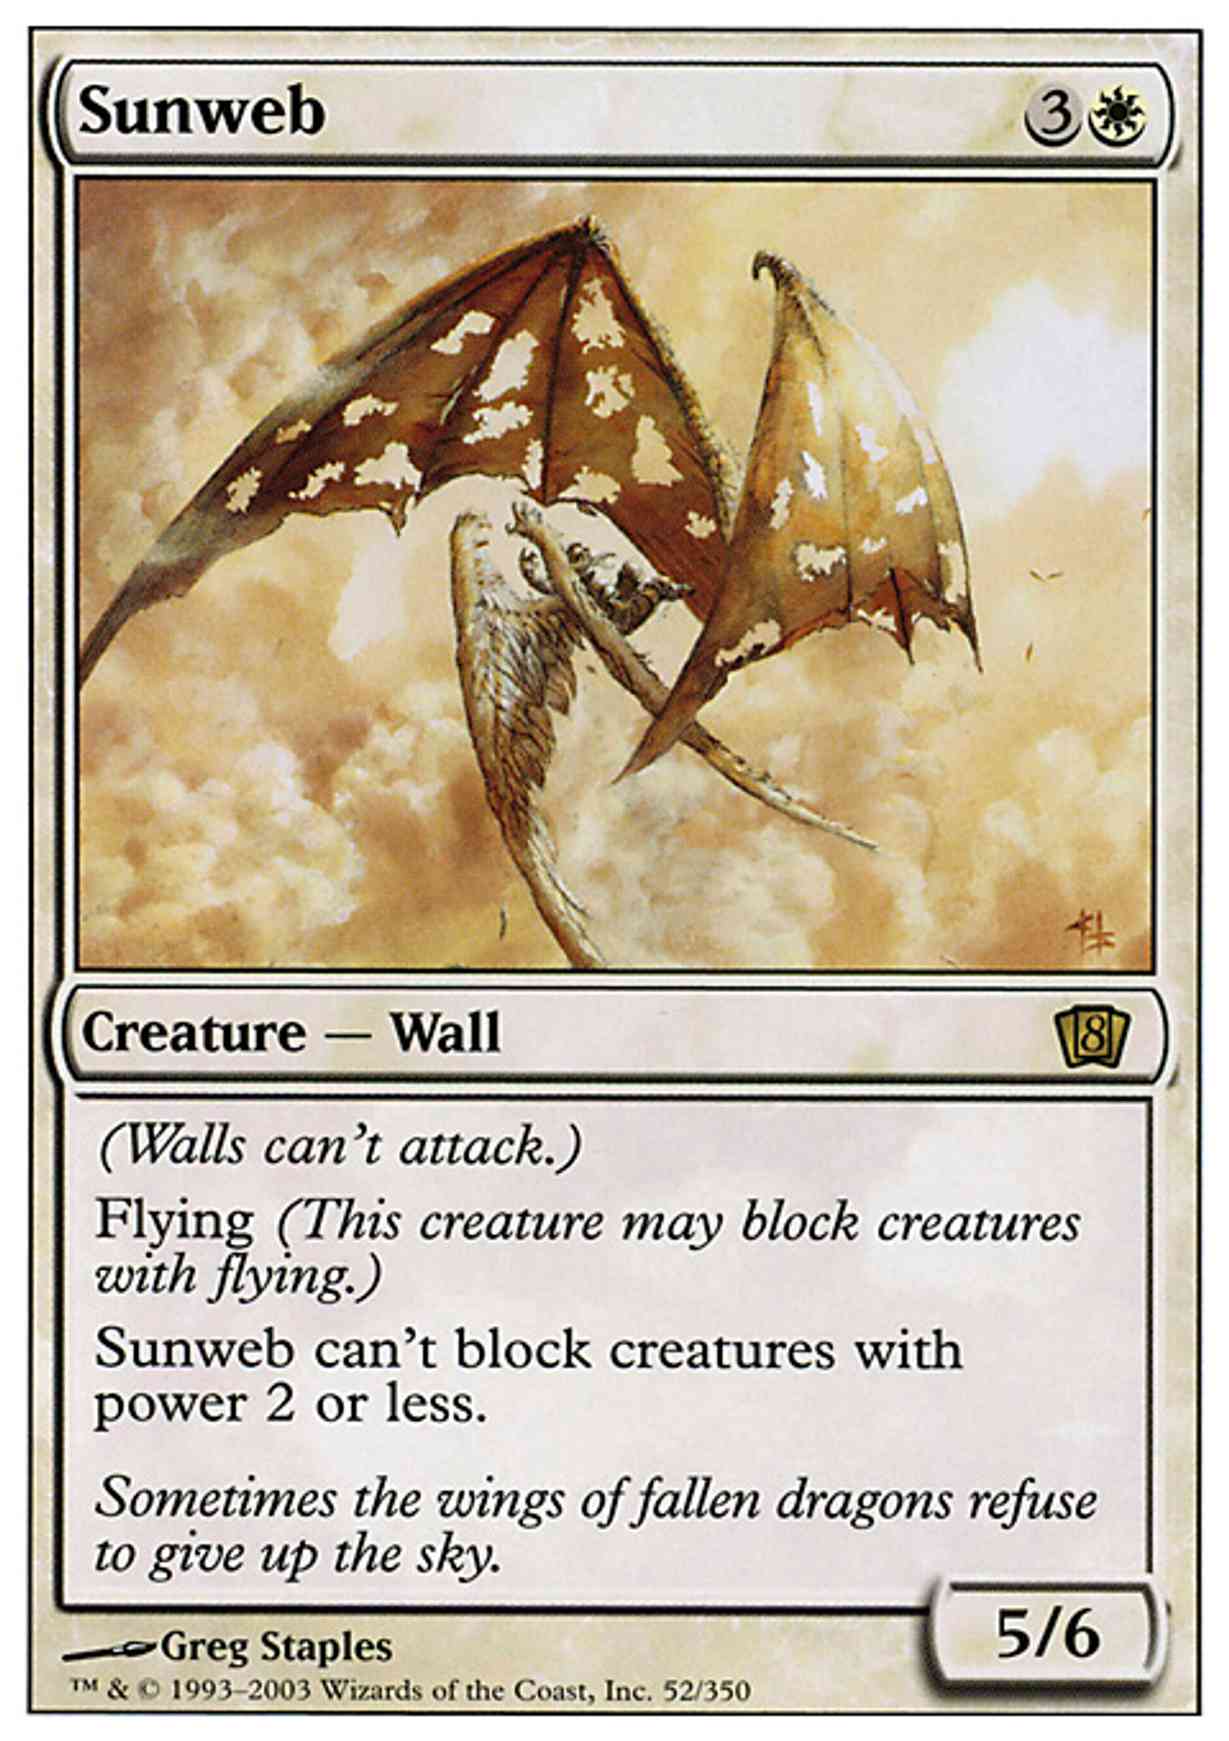 Sunweb magic card front